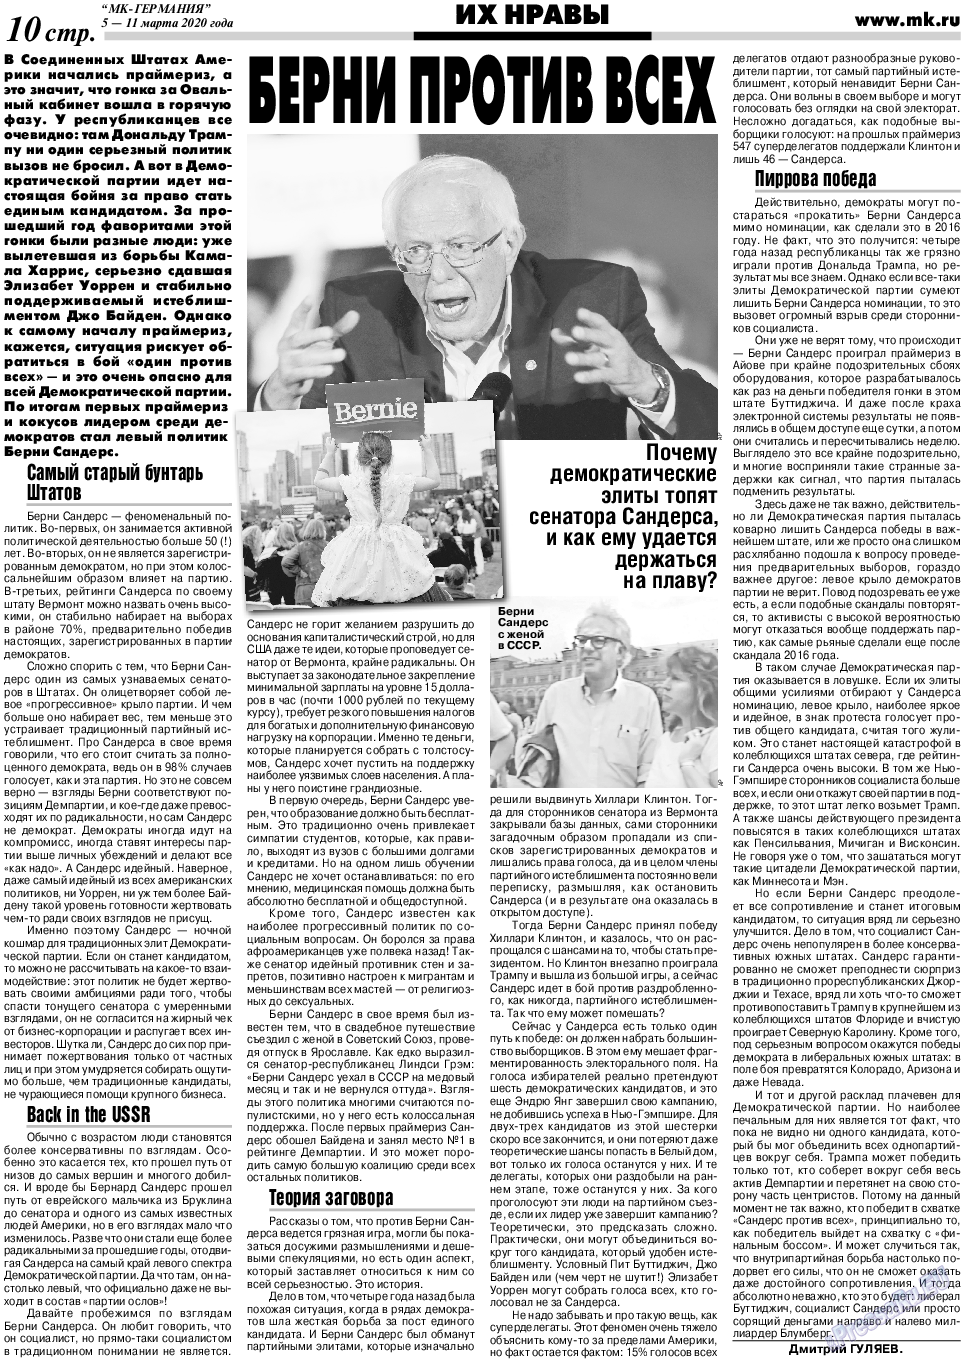 МК-Германия, газета. 2020 №10 стр.10